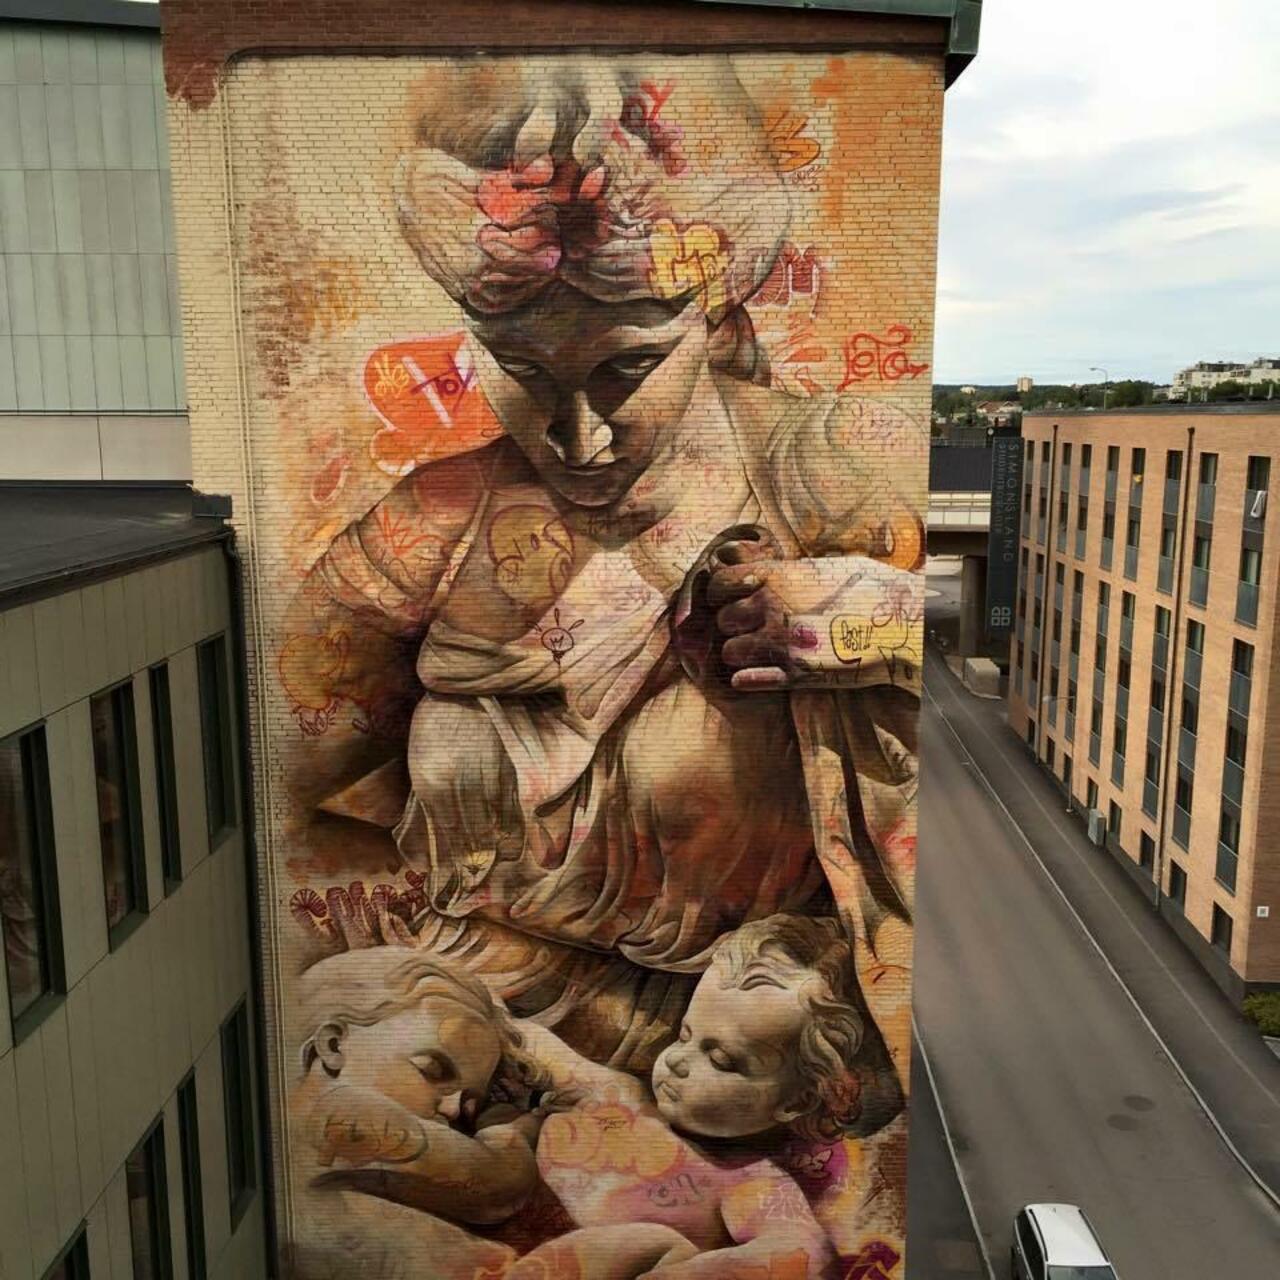 RT @CultRise: @pichiavo • #Art #Arte #Graffiti #StreetArt #arteUrbana #wall #DailyArt • #ReactCreating http://t.co/2EYtYe7oOk